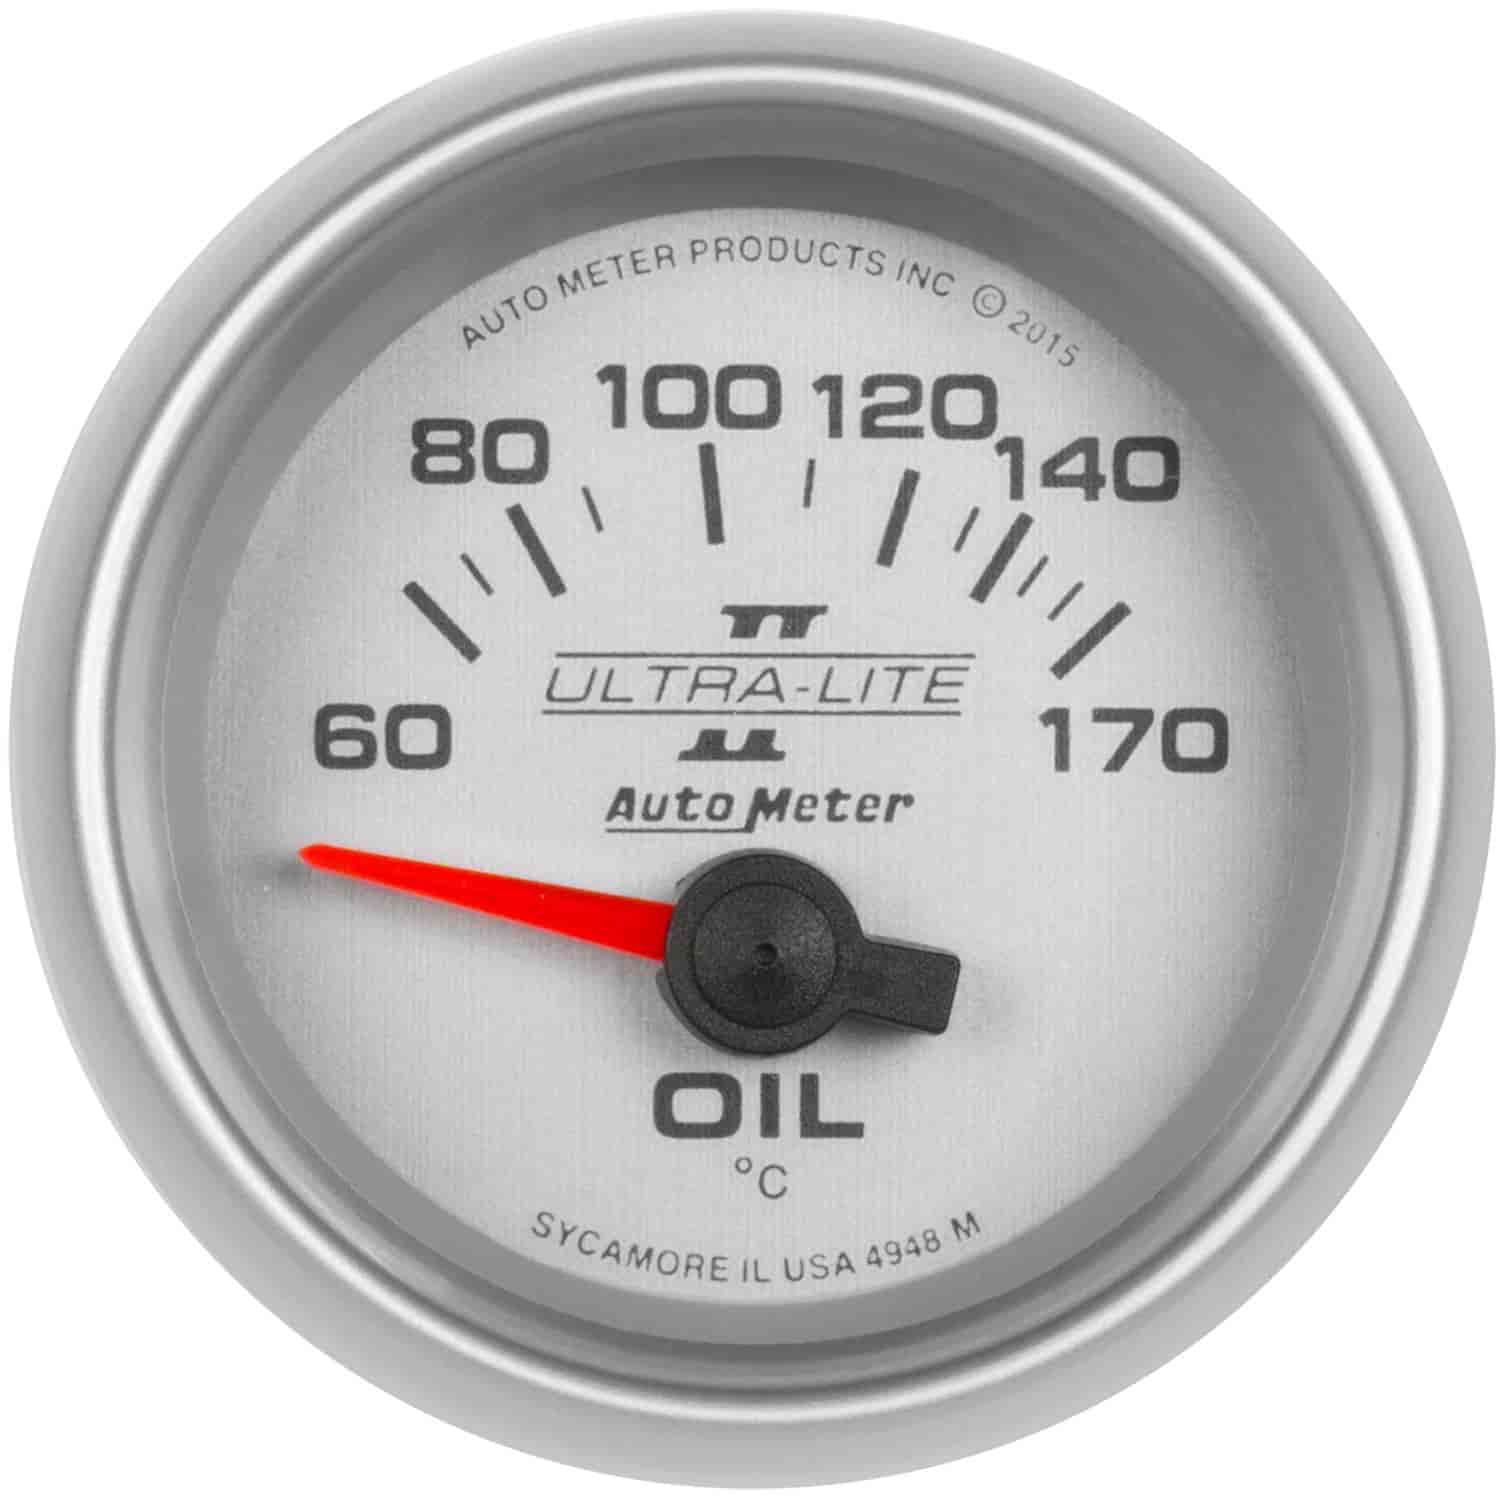 Ultra-Lite II Oil Temperature Gauge 2-1/16" short sweep electrical